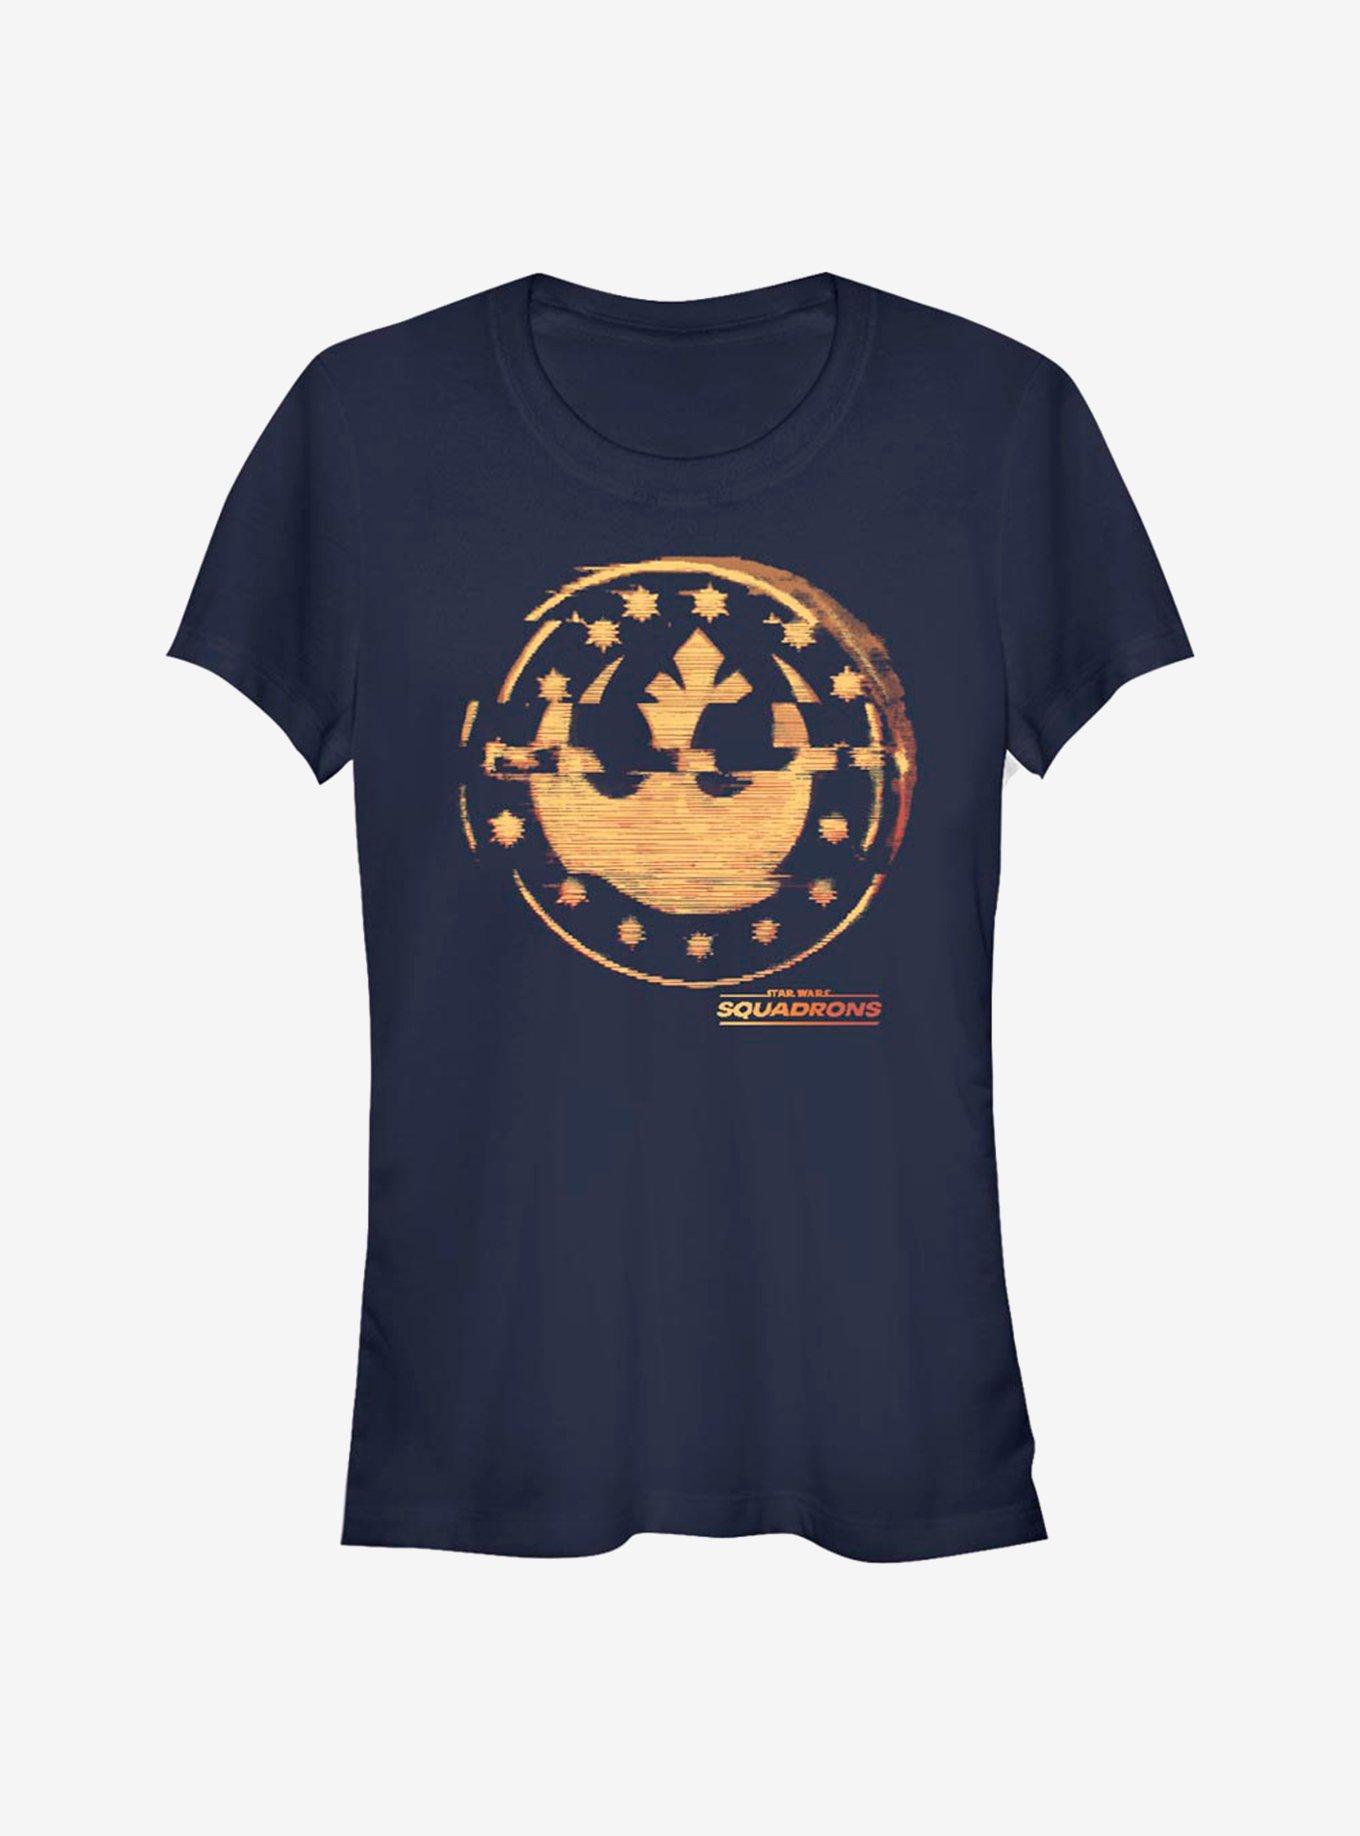 Star Wars Glitched Logo Girls T-Shirt, , hi-res